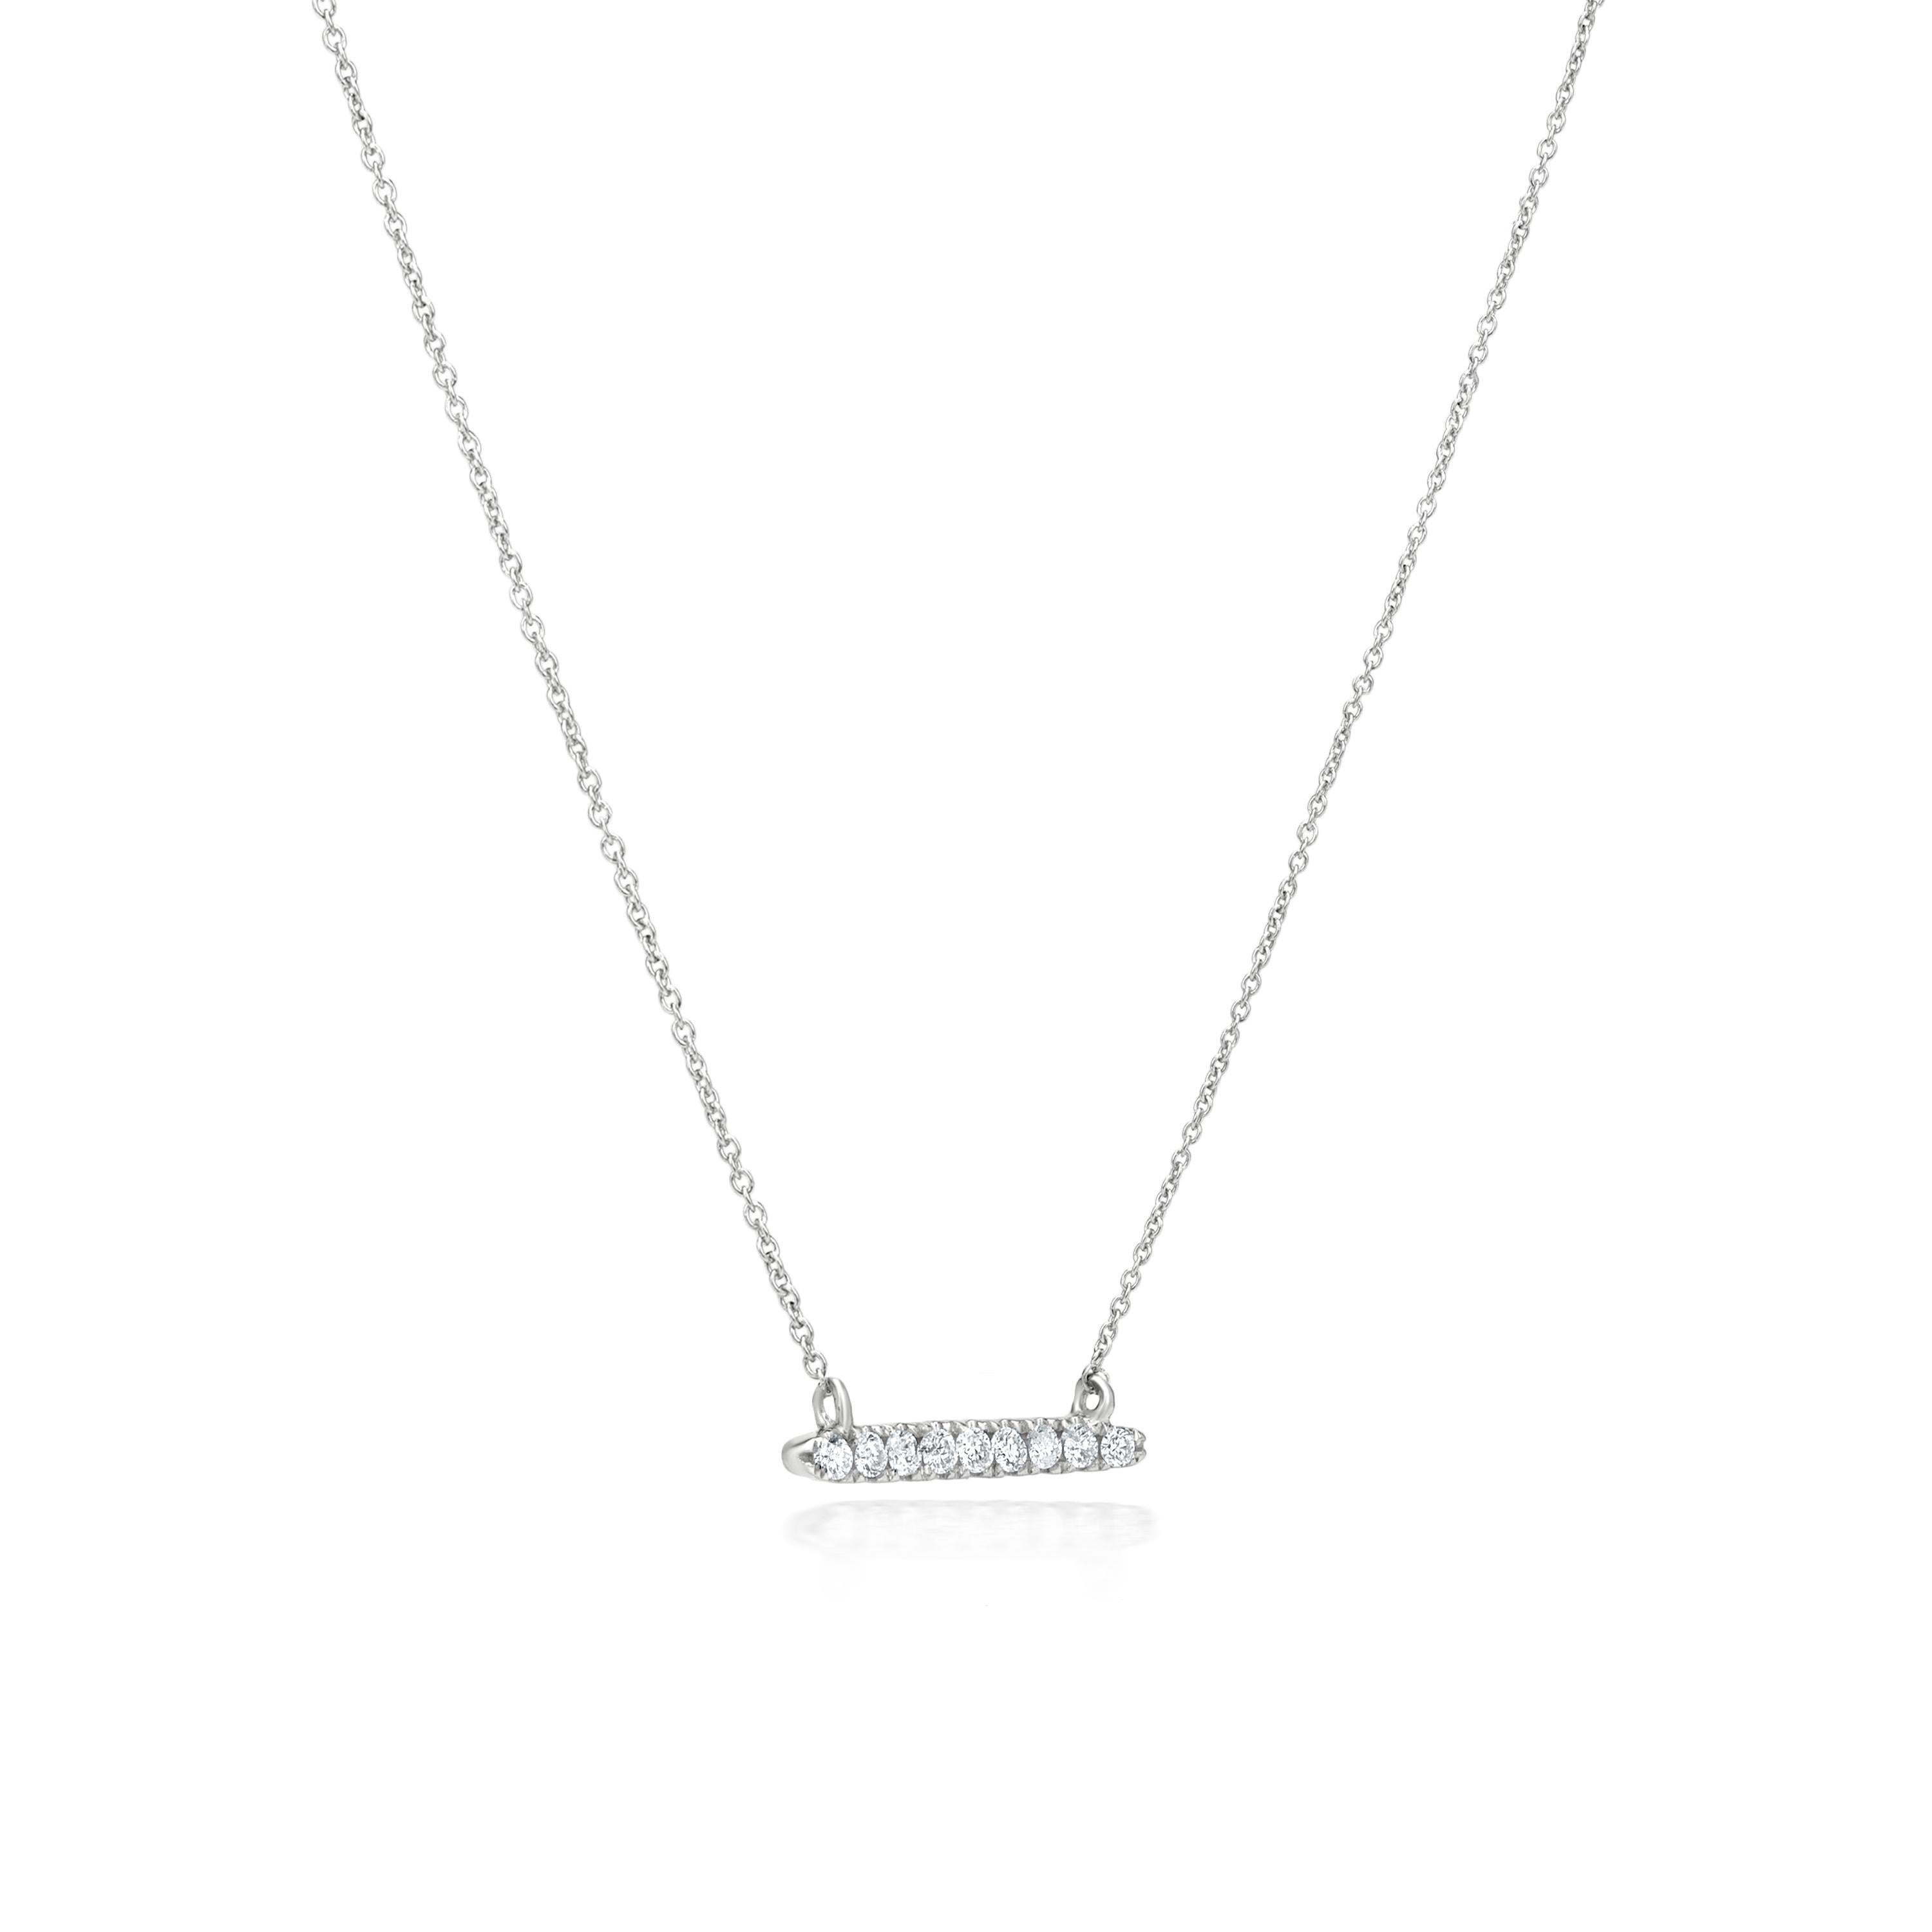 Round Cut Luxle Bar Diamond Pendant Necklace in 18K White Gold